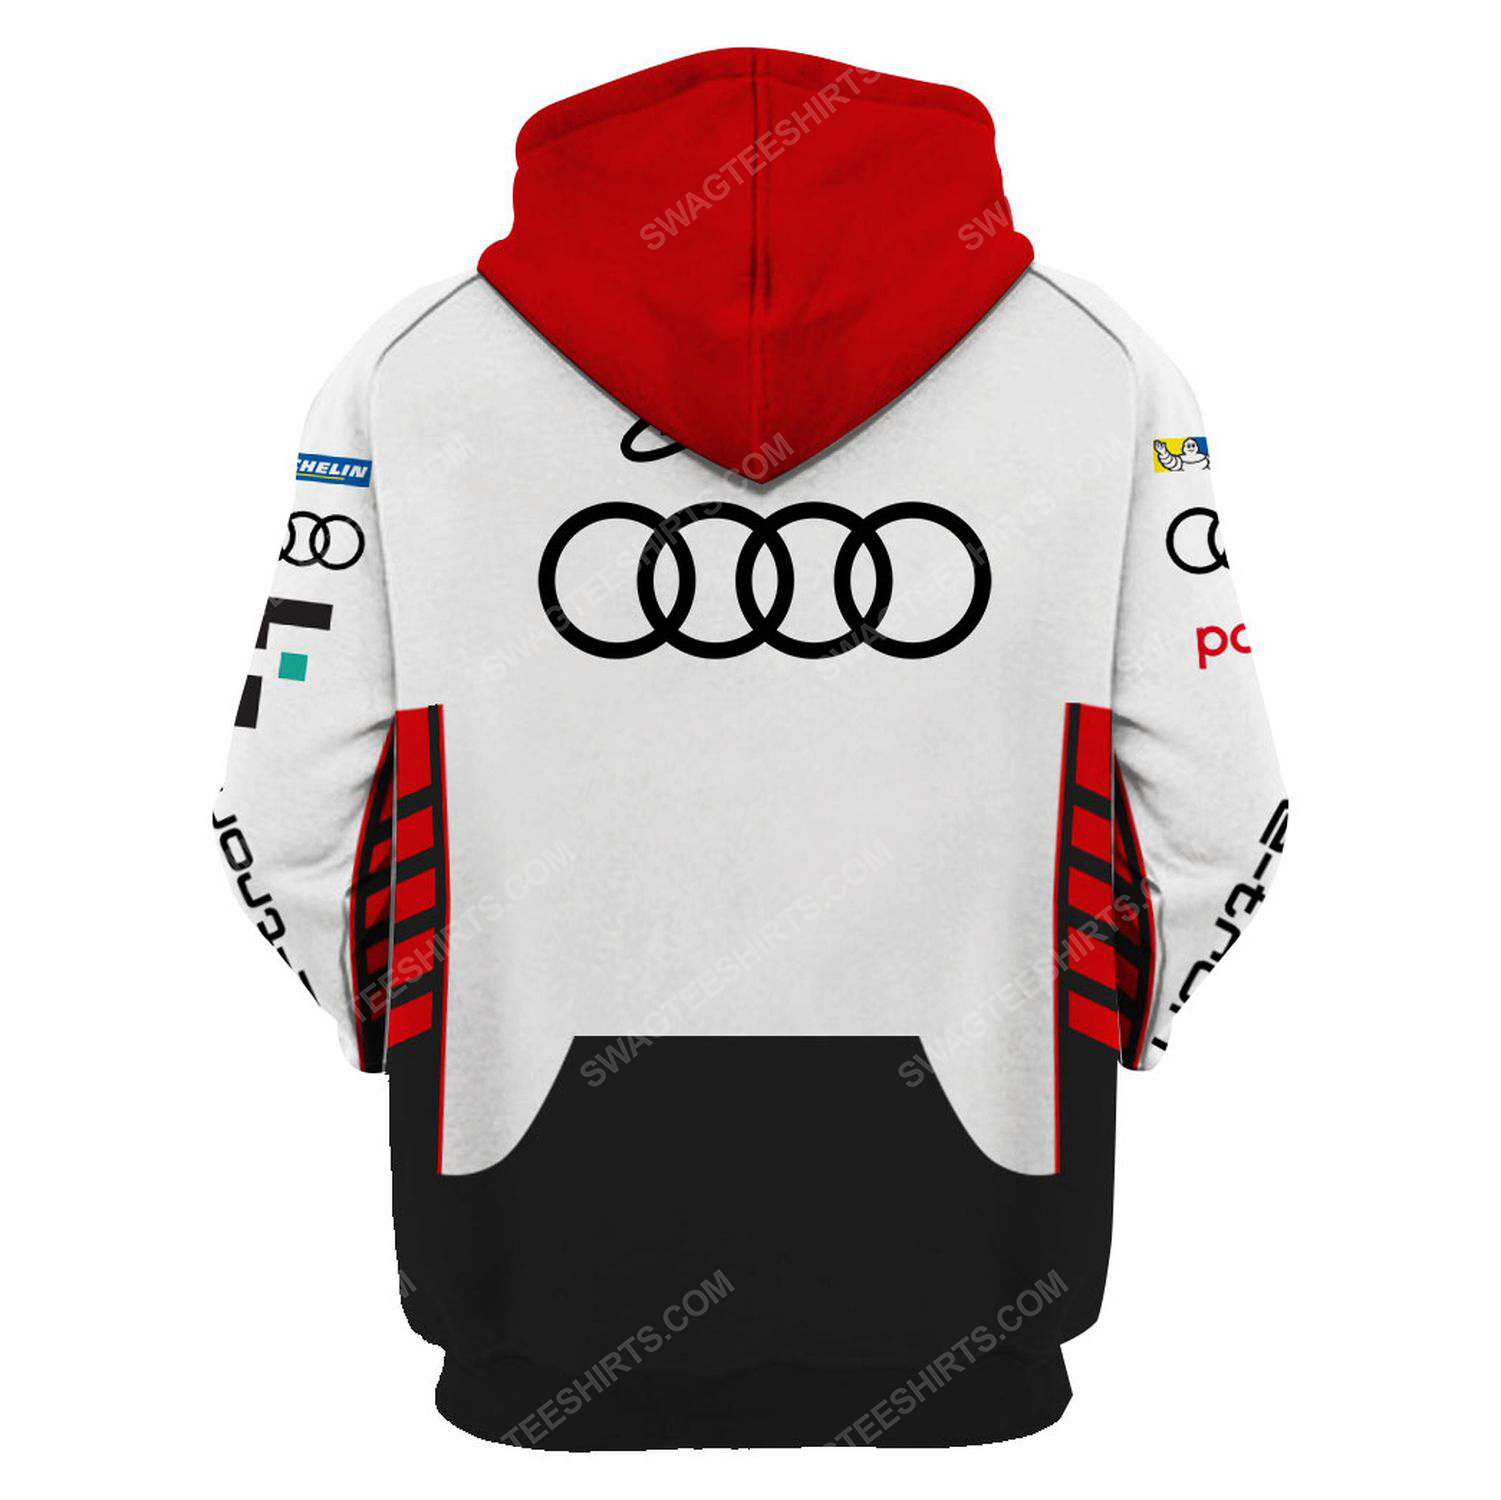 Audi e-tron schwarzer racing team motorsport full printing hoodie - back